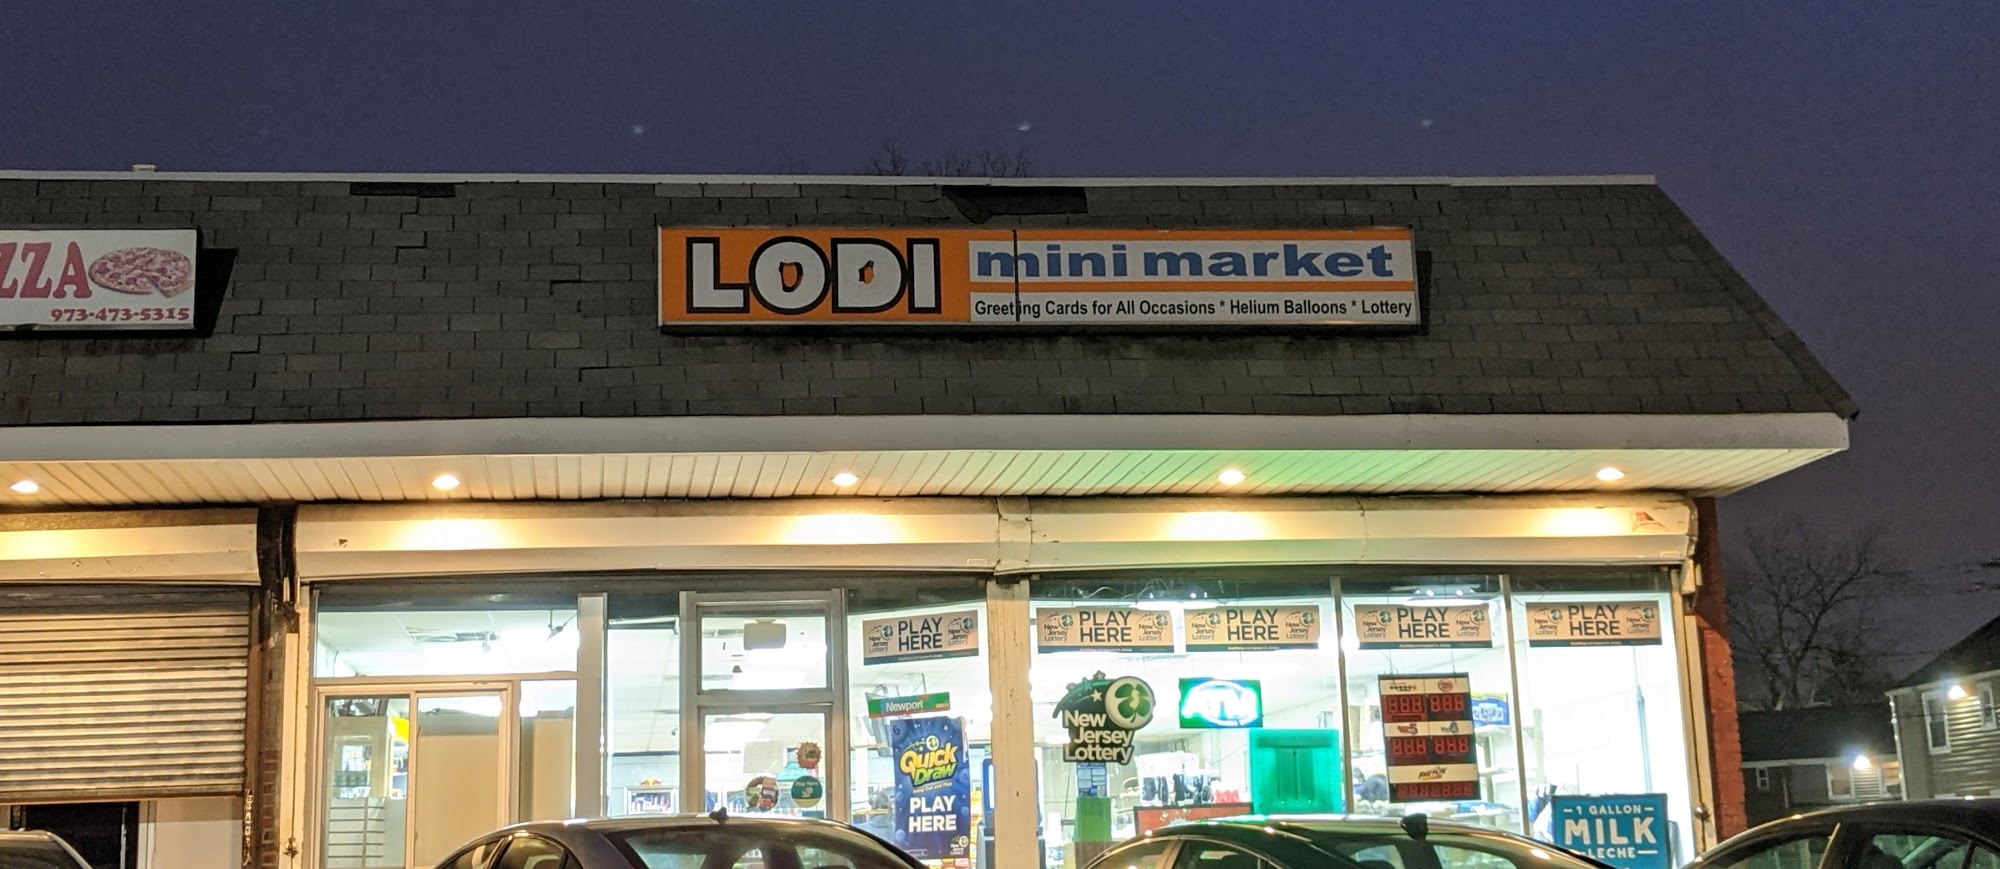 Lodi Minimarket